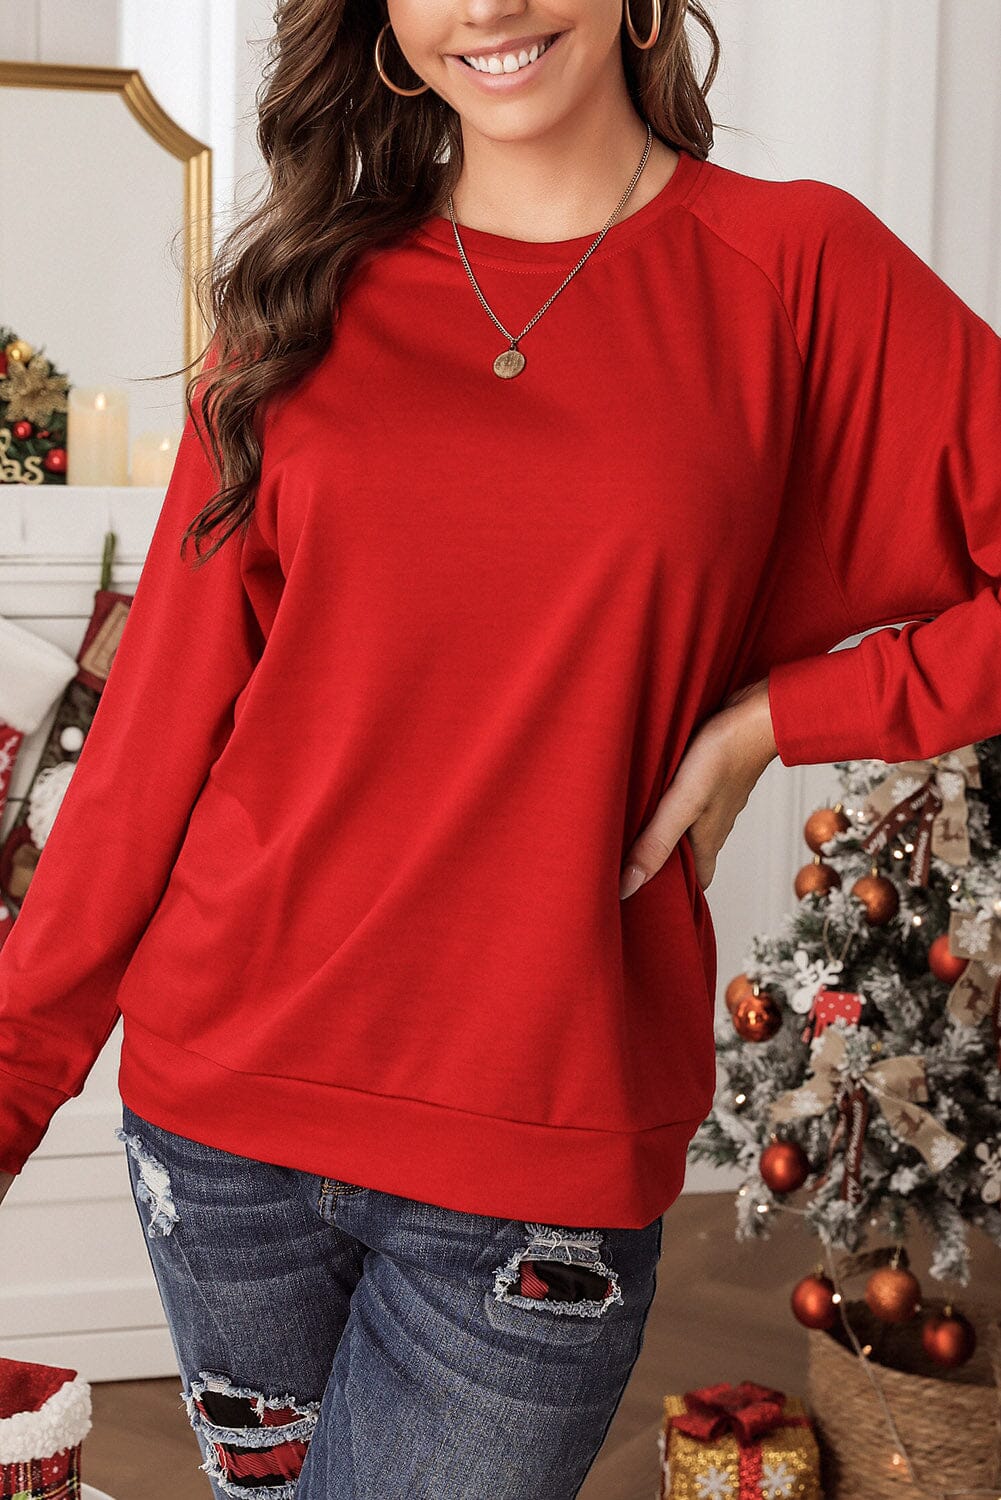 KaleaBoutique Solid Round Neck Raglan Sleeve Red Sweatshirt Top Pullover Sweater Shirt - KaleaBoutique.com